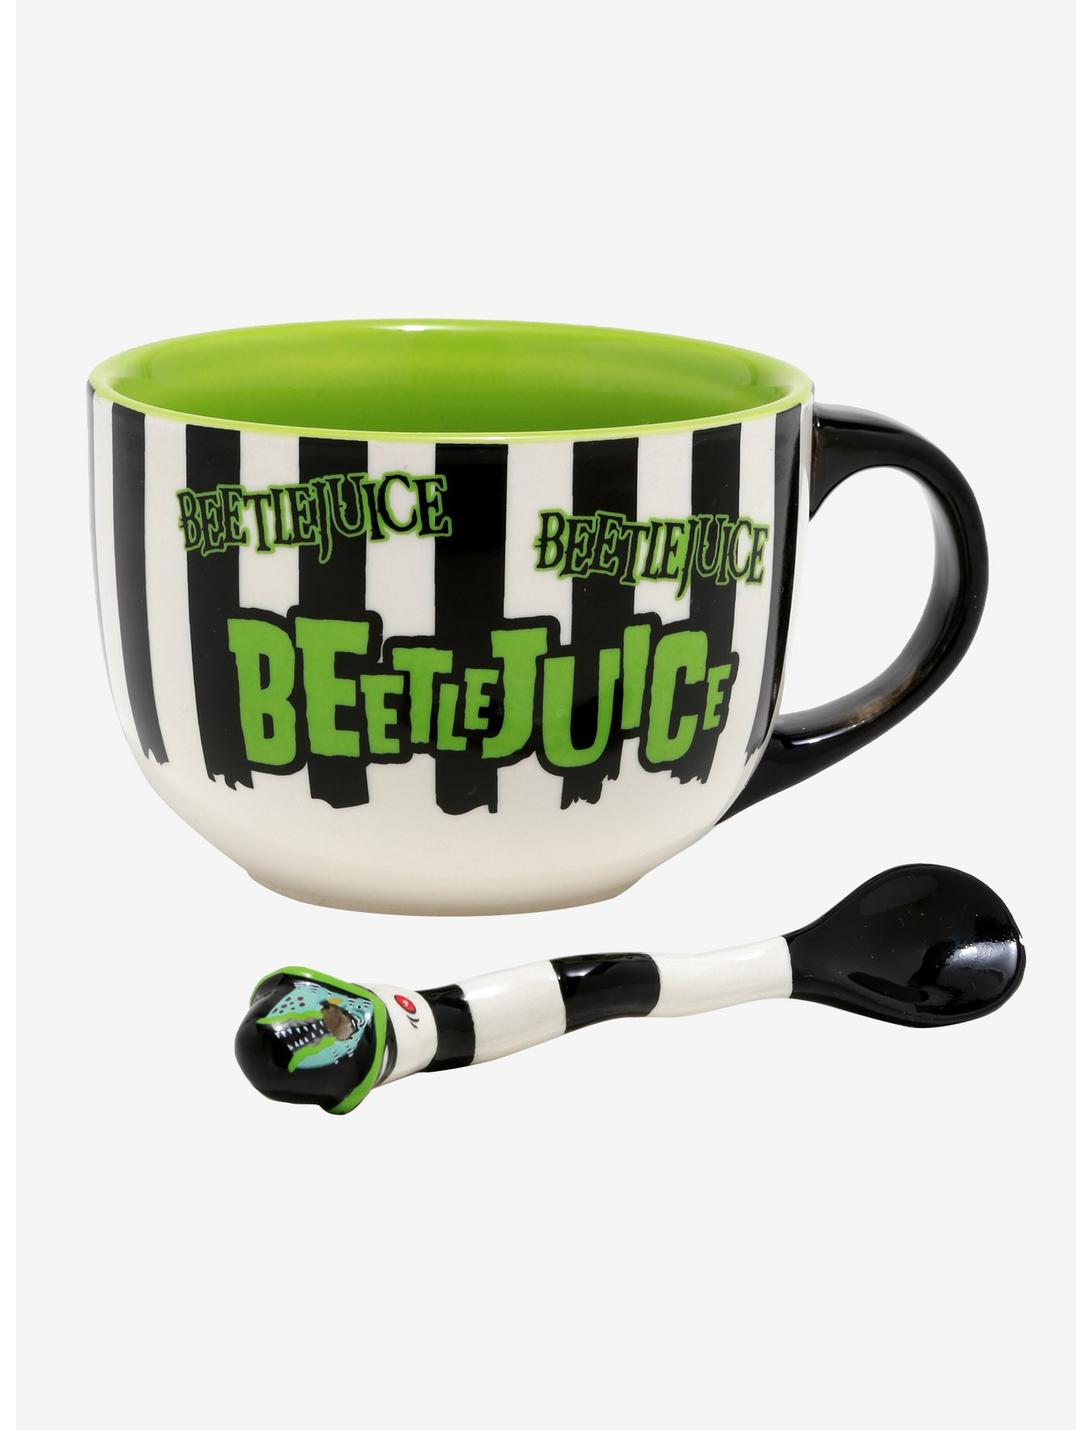 Beetlejuice Black & White Striped Soup Mug & Spoon, , hi-res